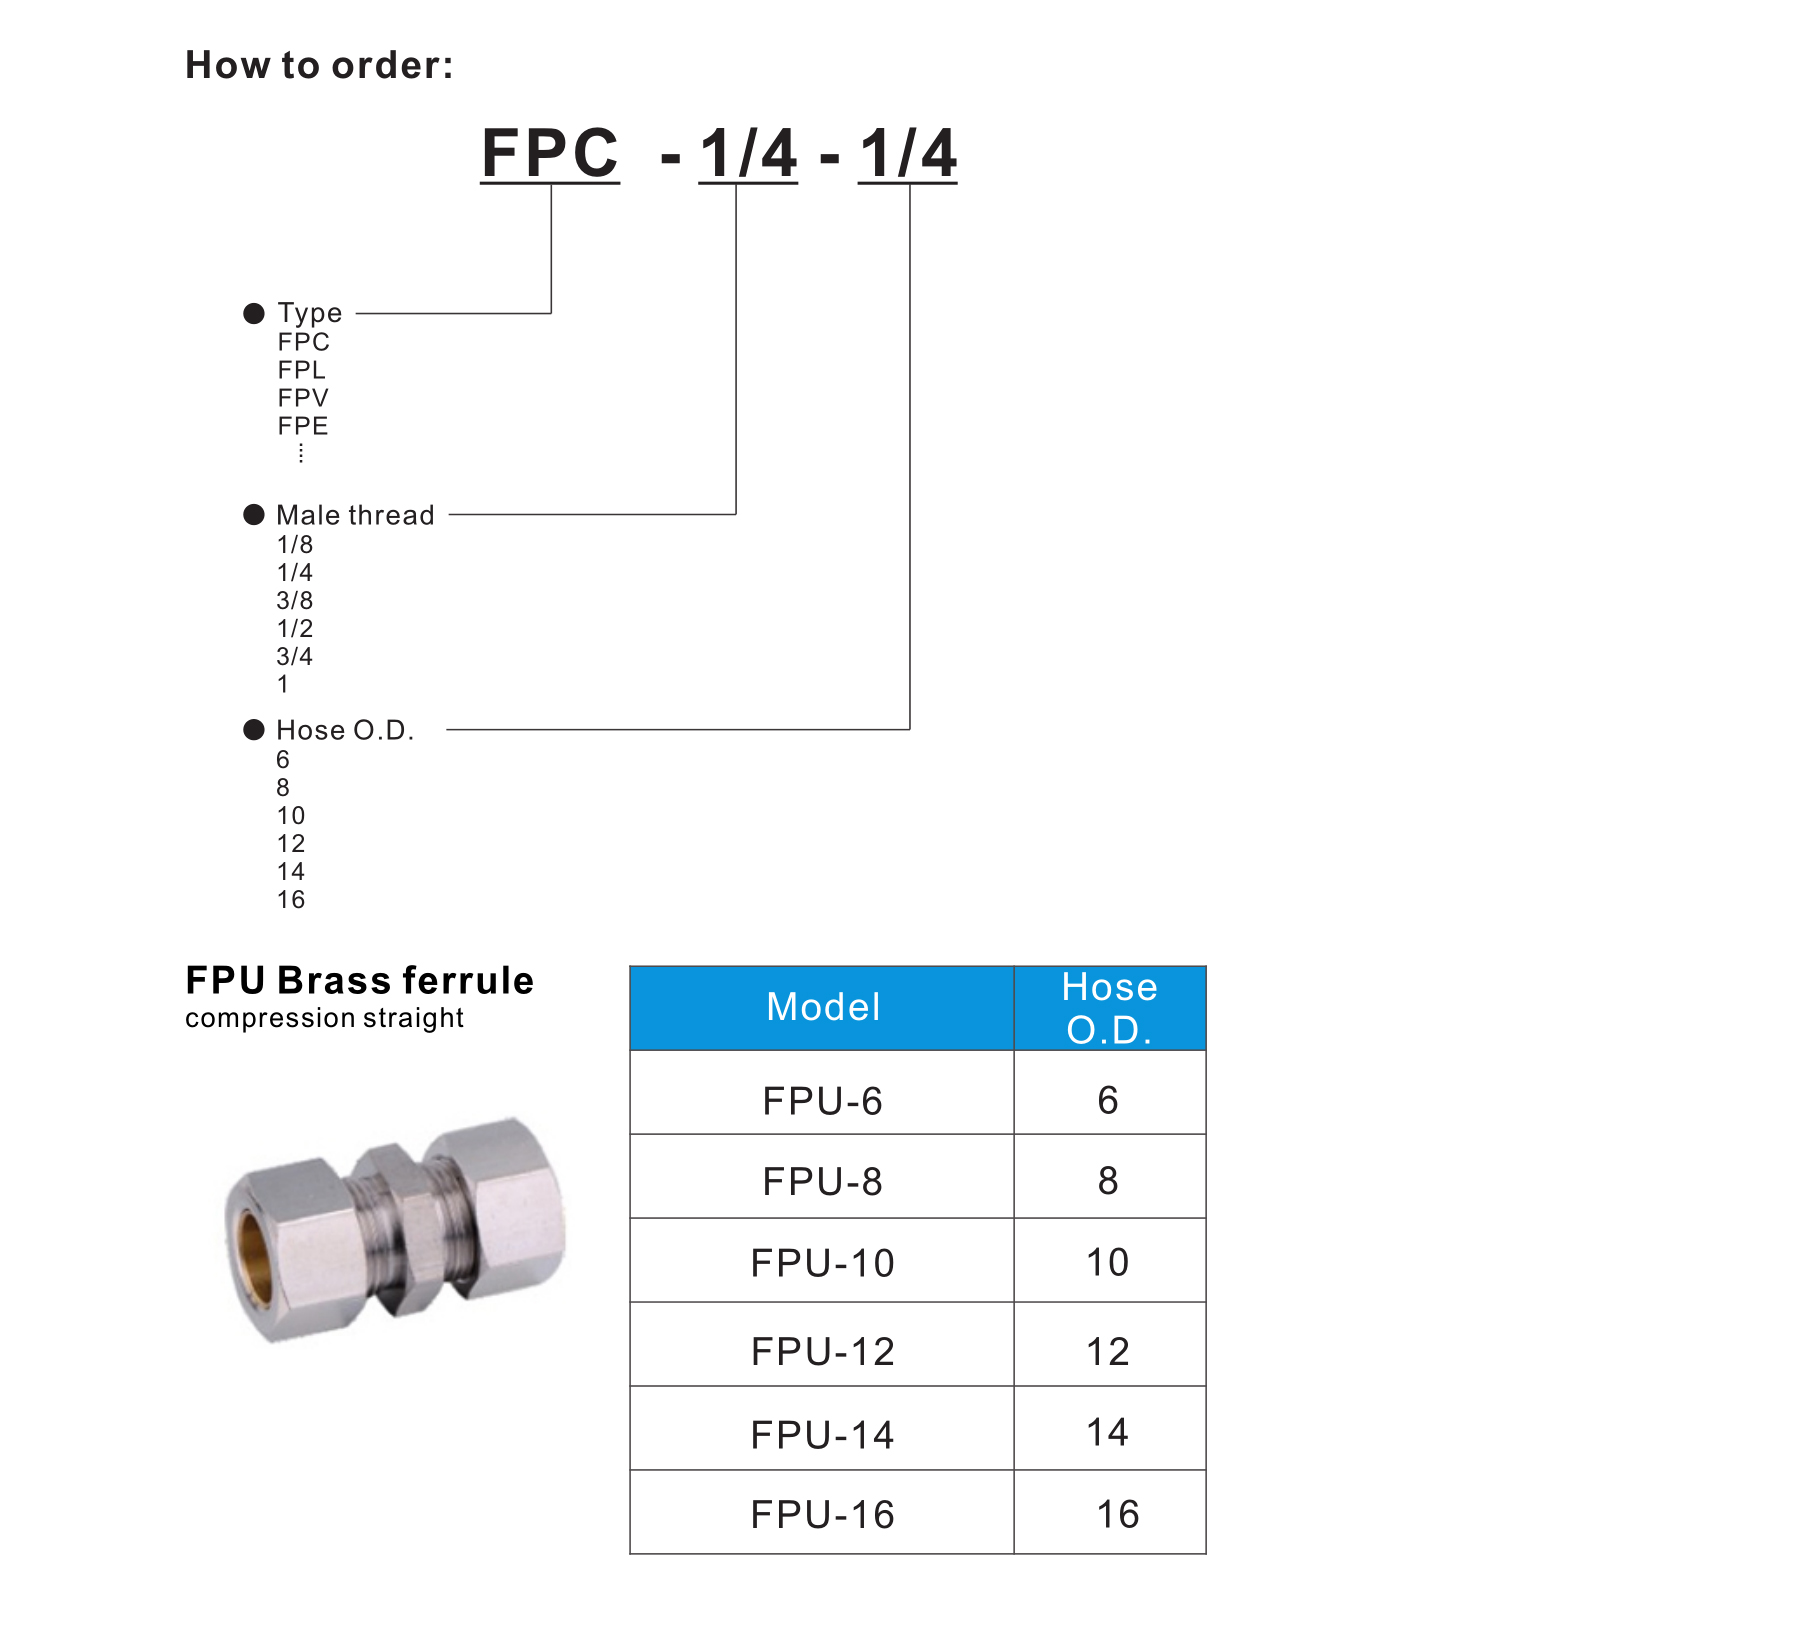 FPU Brass ferrule compression straight